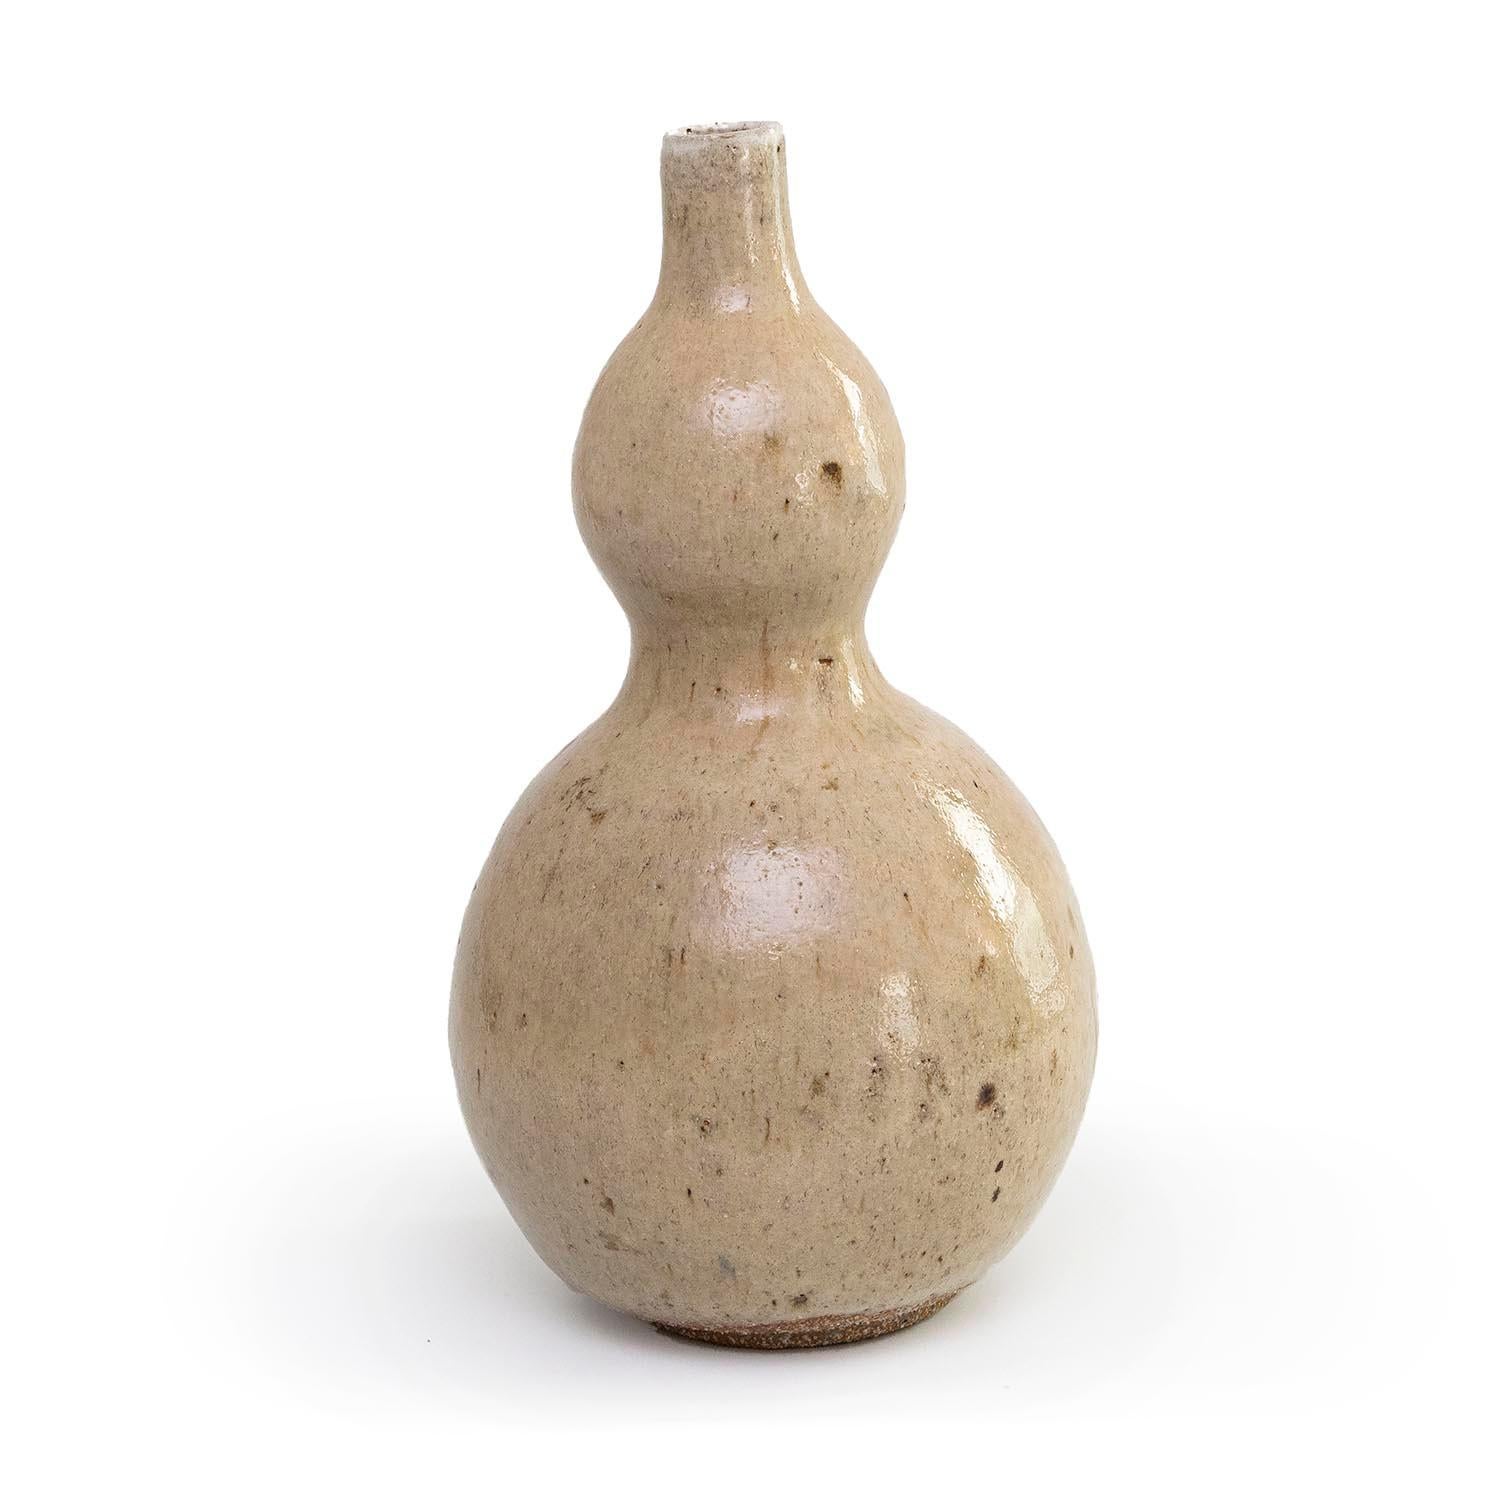 Michael Frimkess
Cream Calabash (INV# NP3996)
stoneware and glaze
8.5 x 5